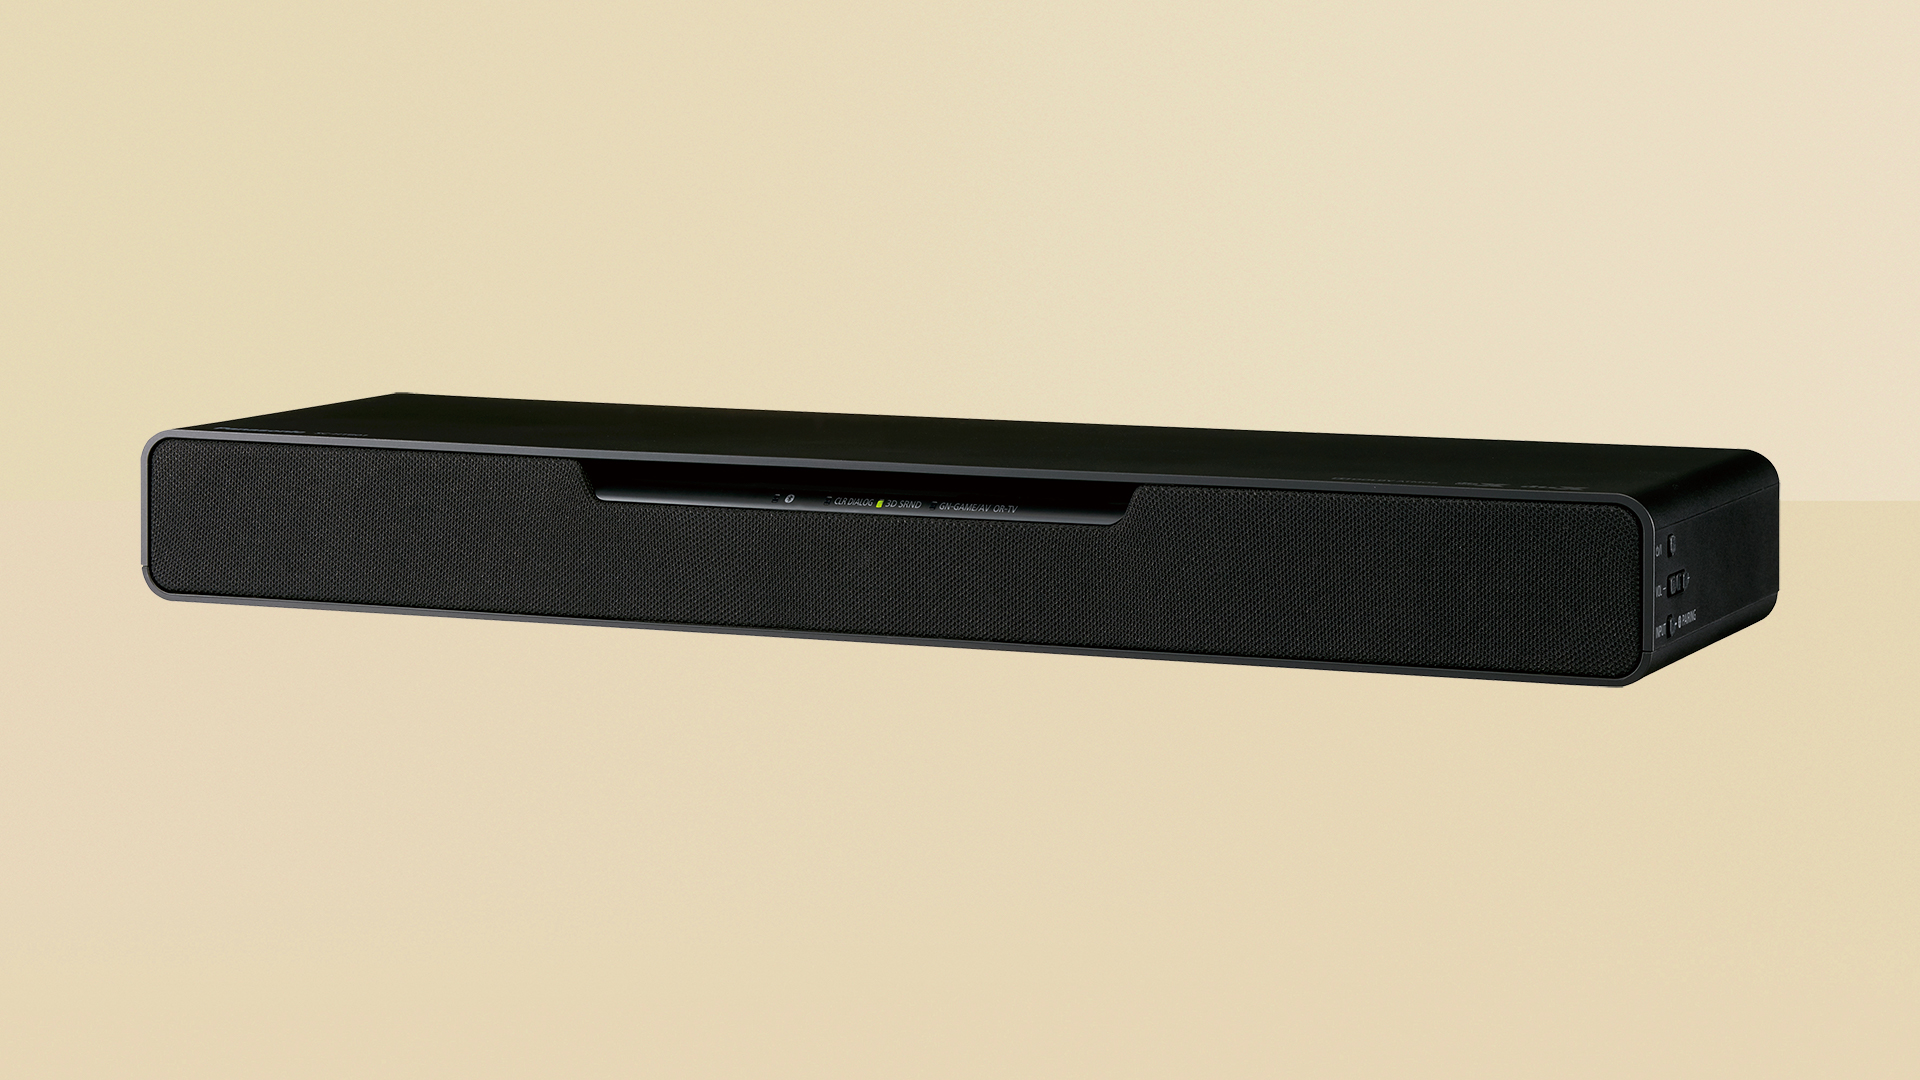 Panasonic SC-HTB01 Soundslayer review: a compact soundbar made for 